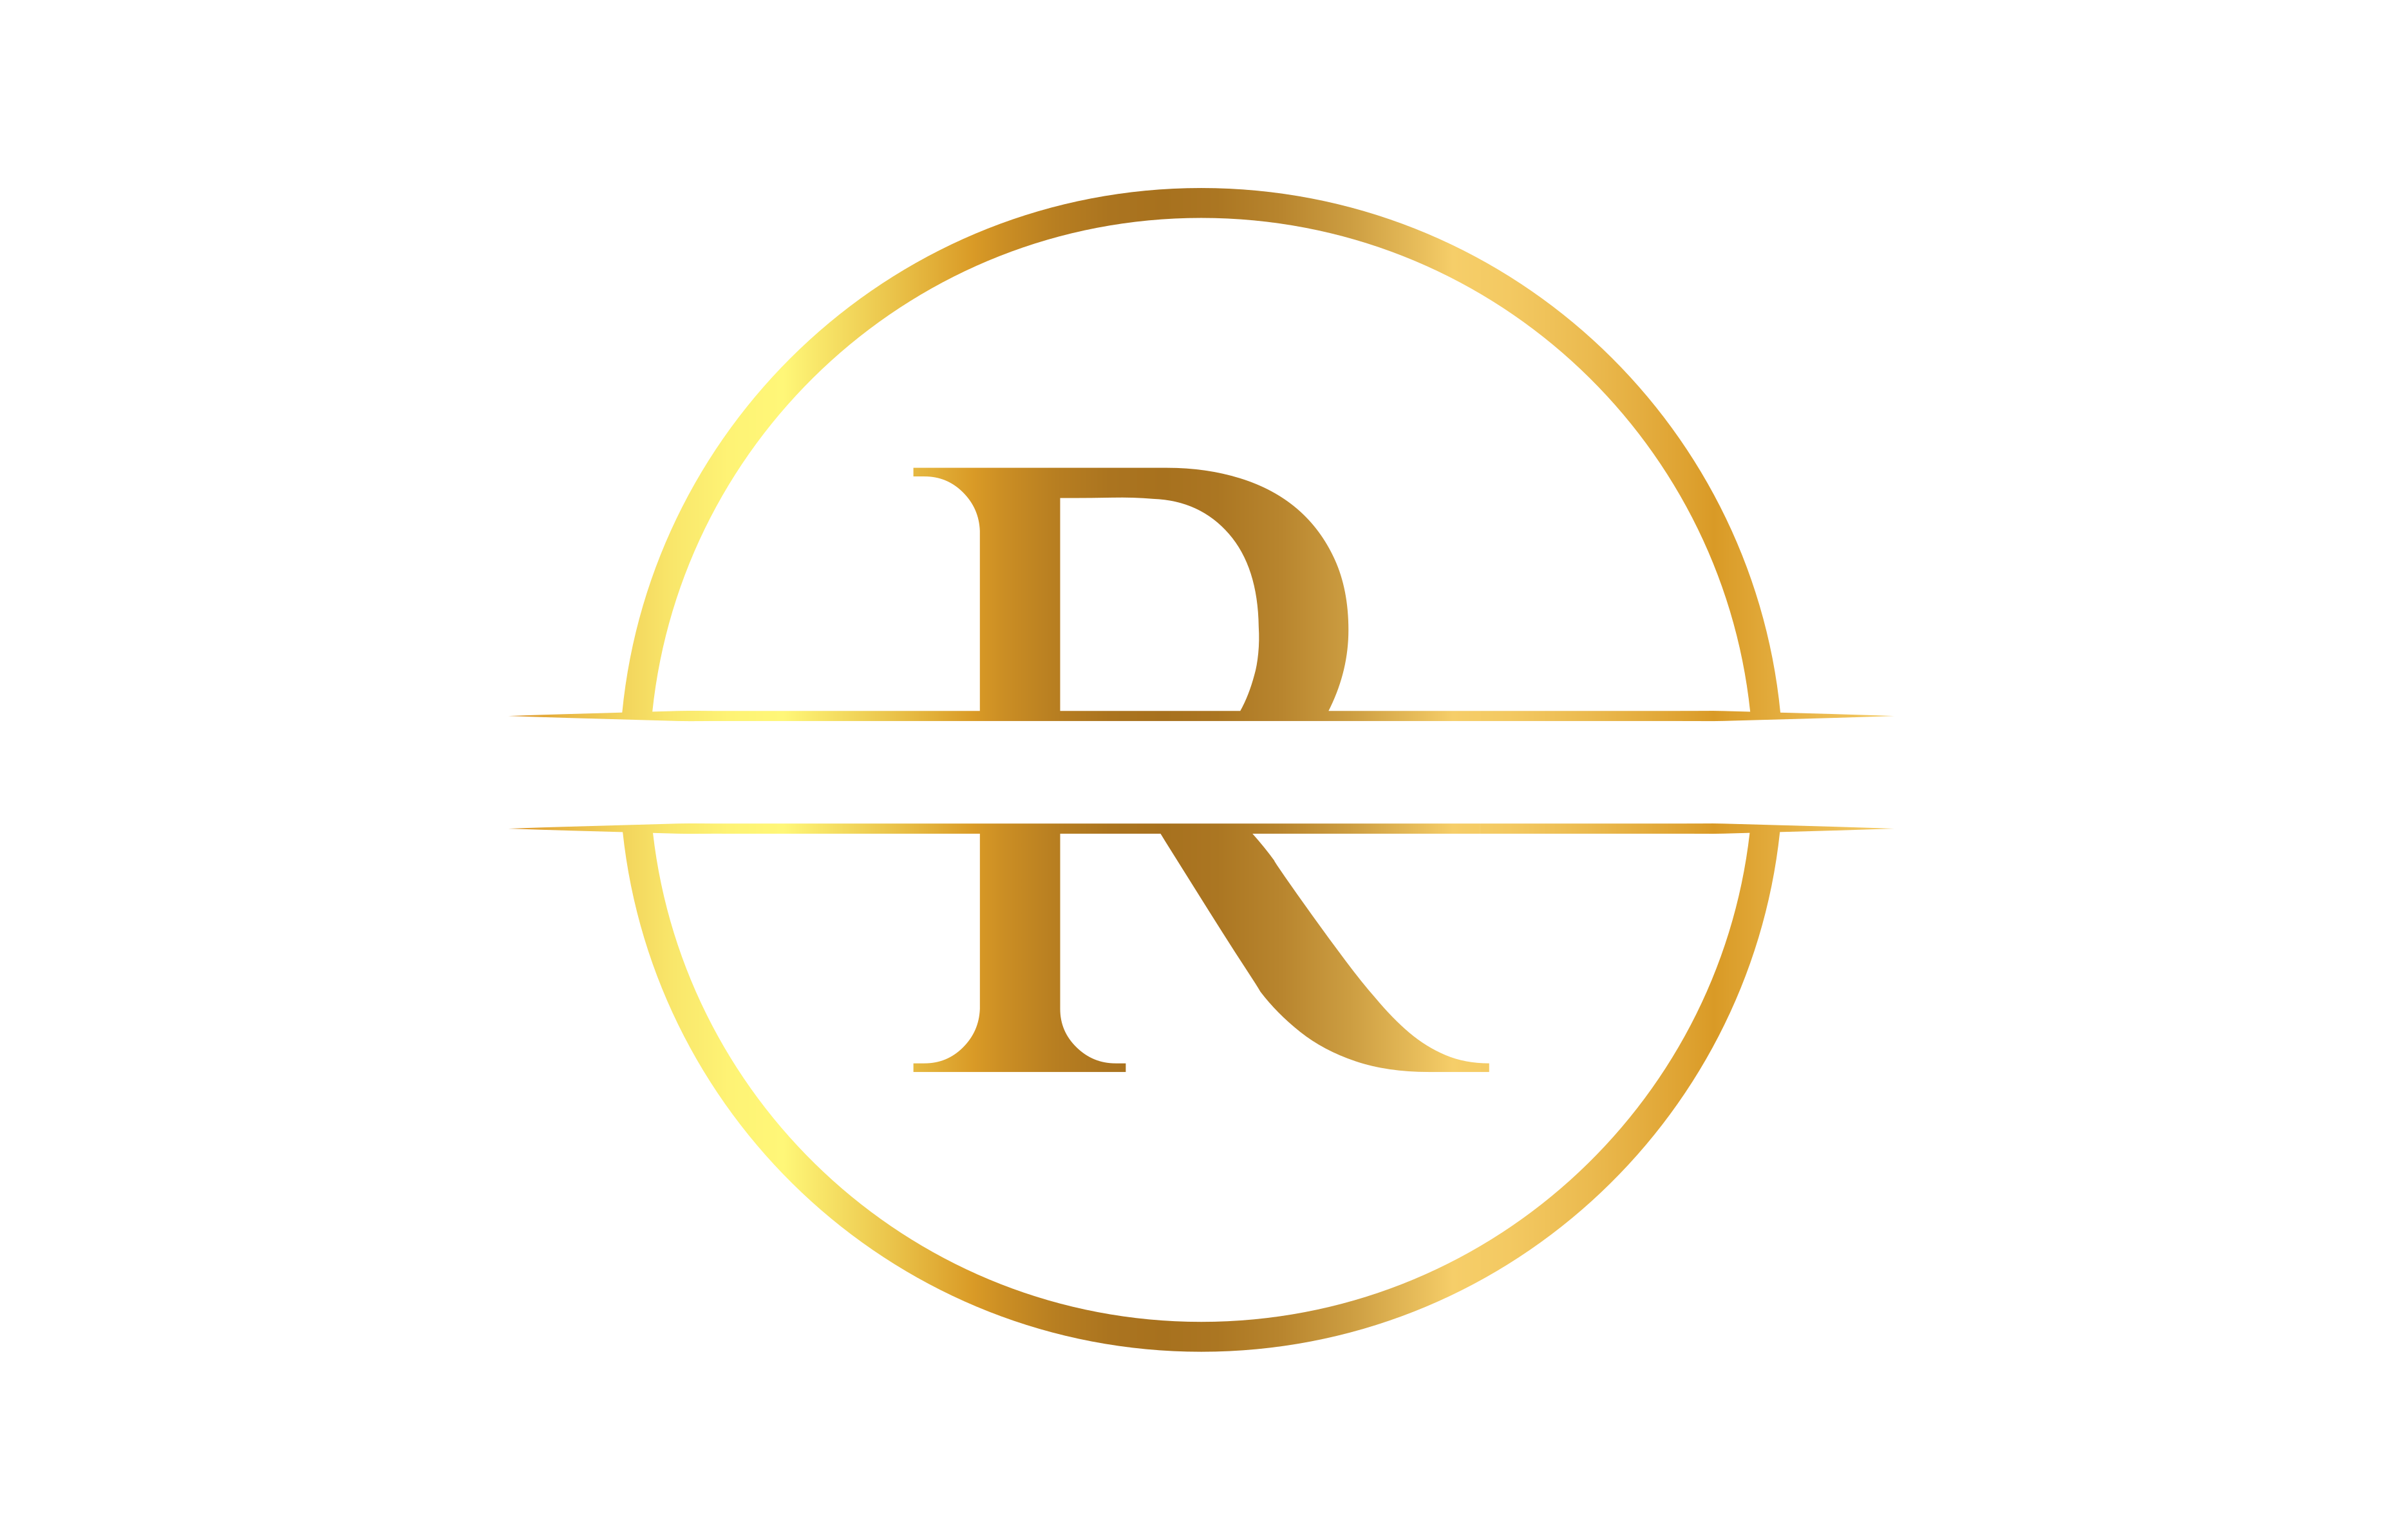 Real Memories Forever Entertainment LLC